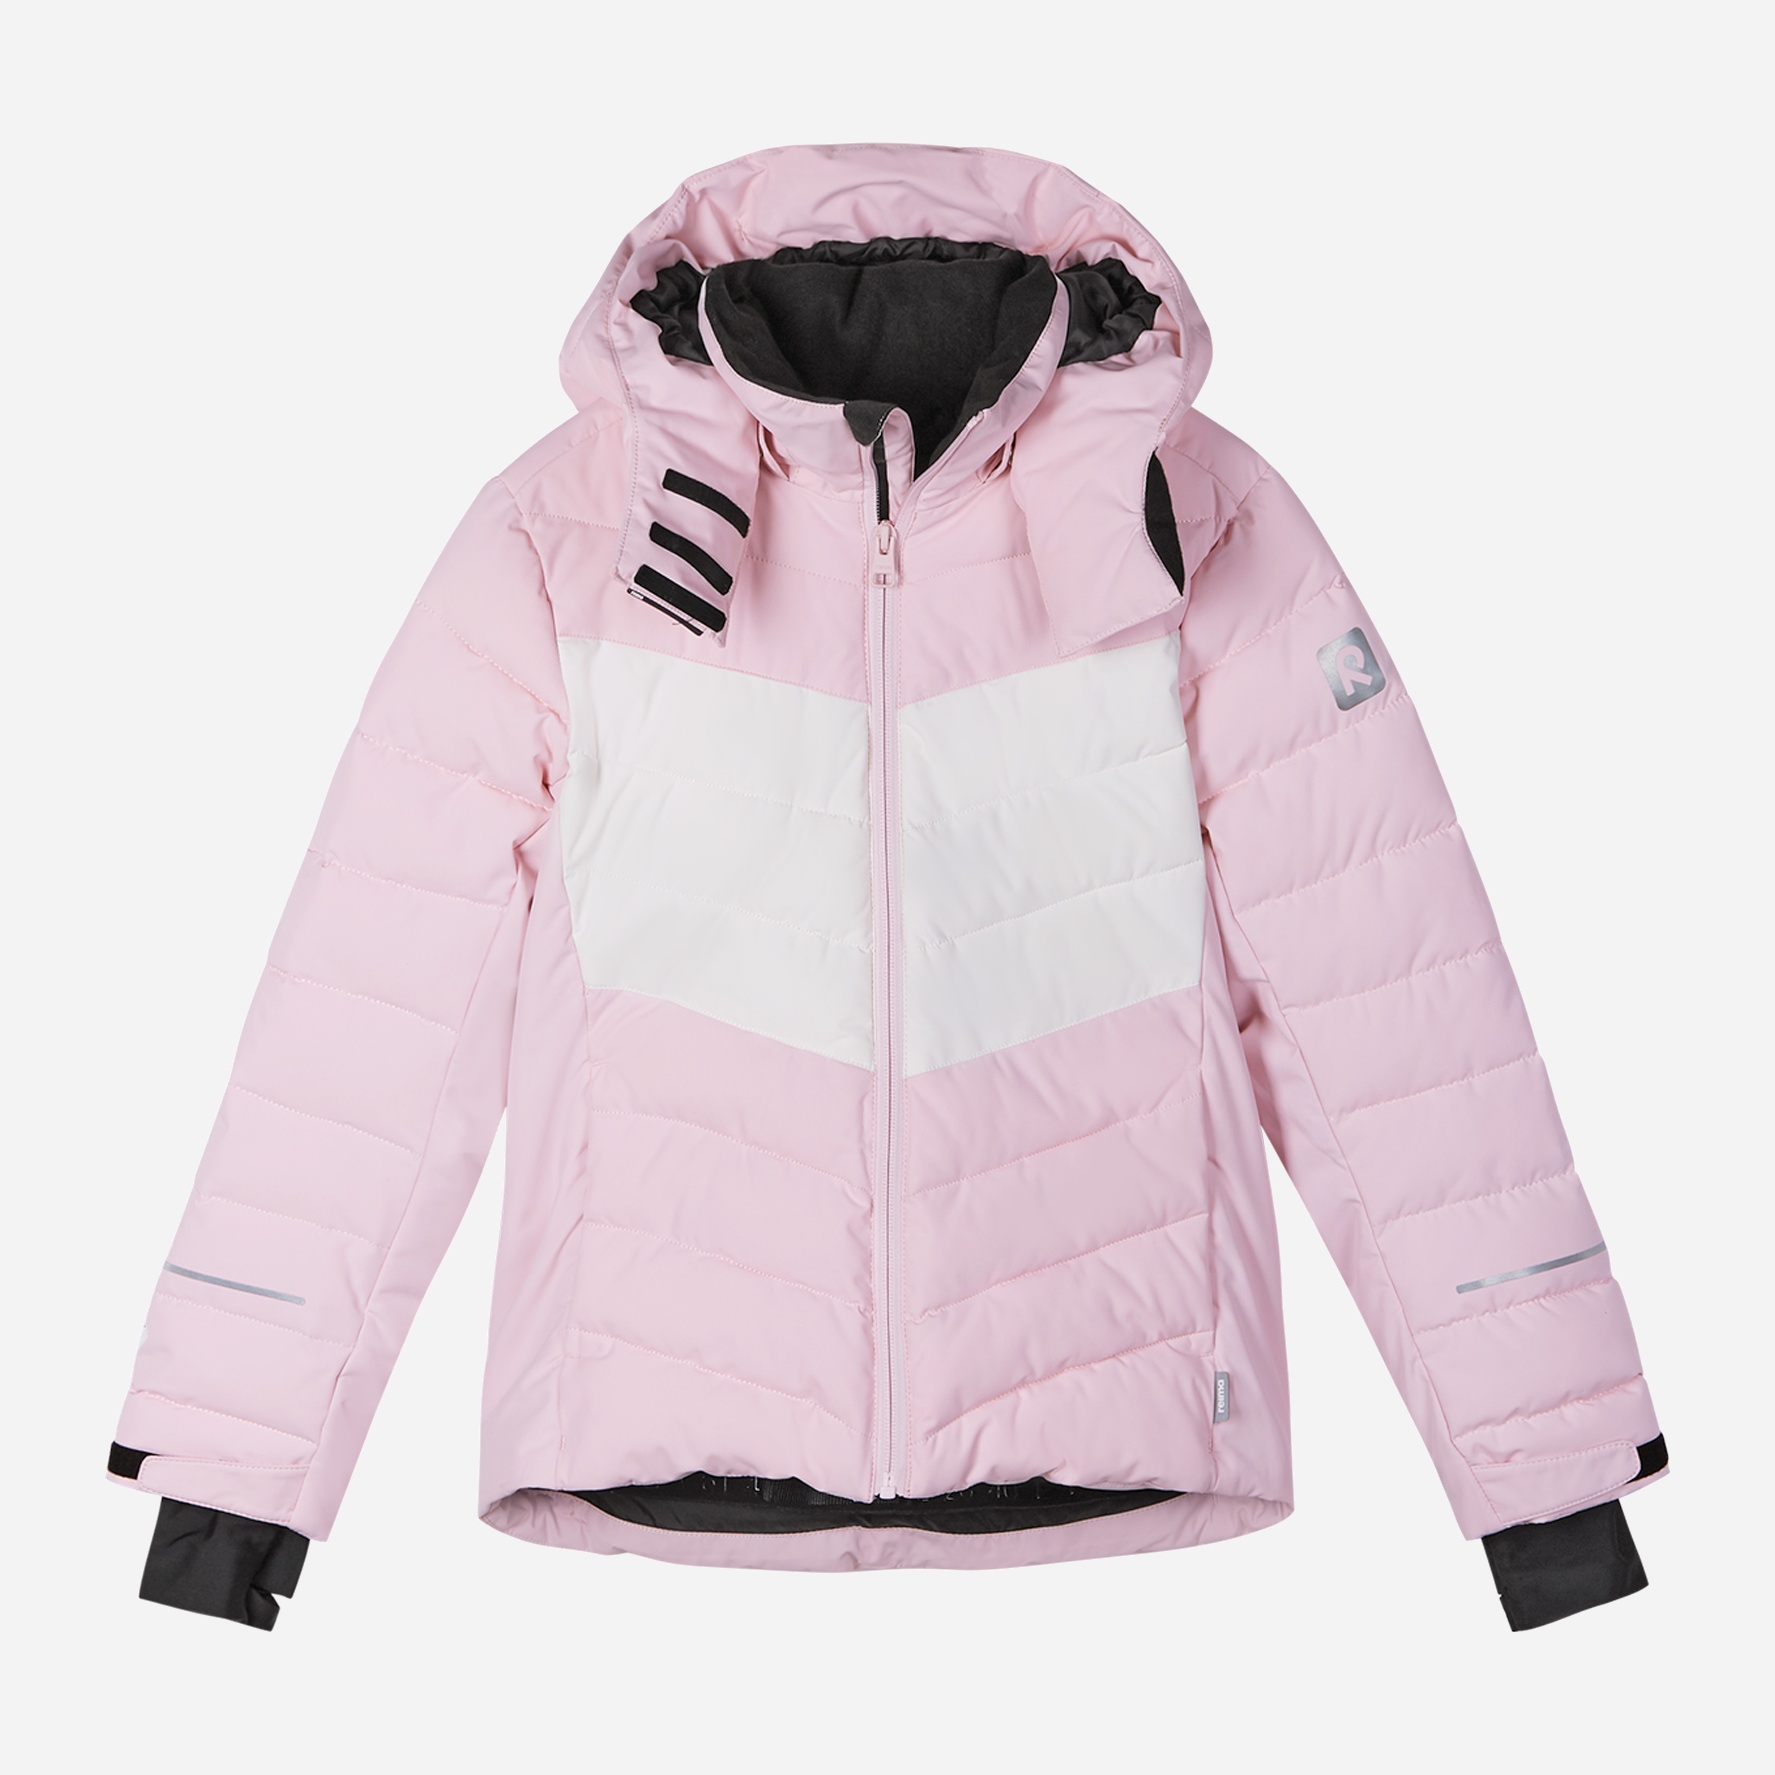 Акция на Дитяча зимова термо лижна куртка для дівчинки Reima Saivaara 531556-4010 134 см от Rozetka